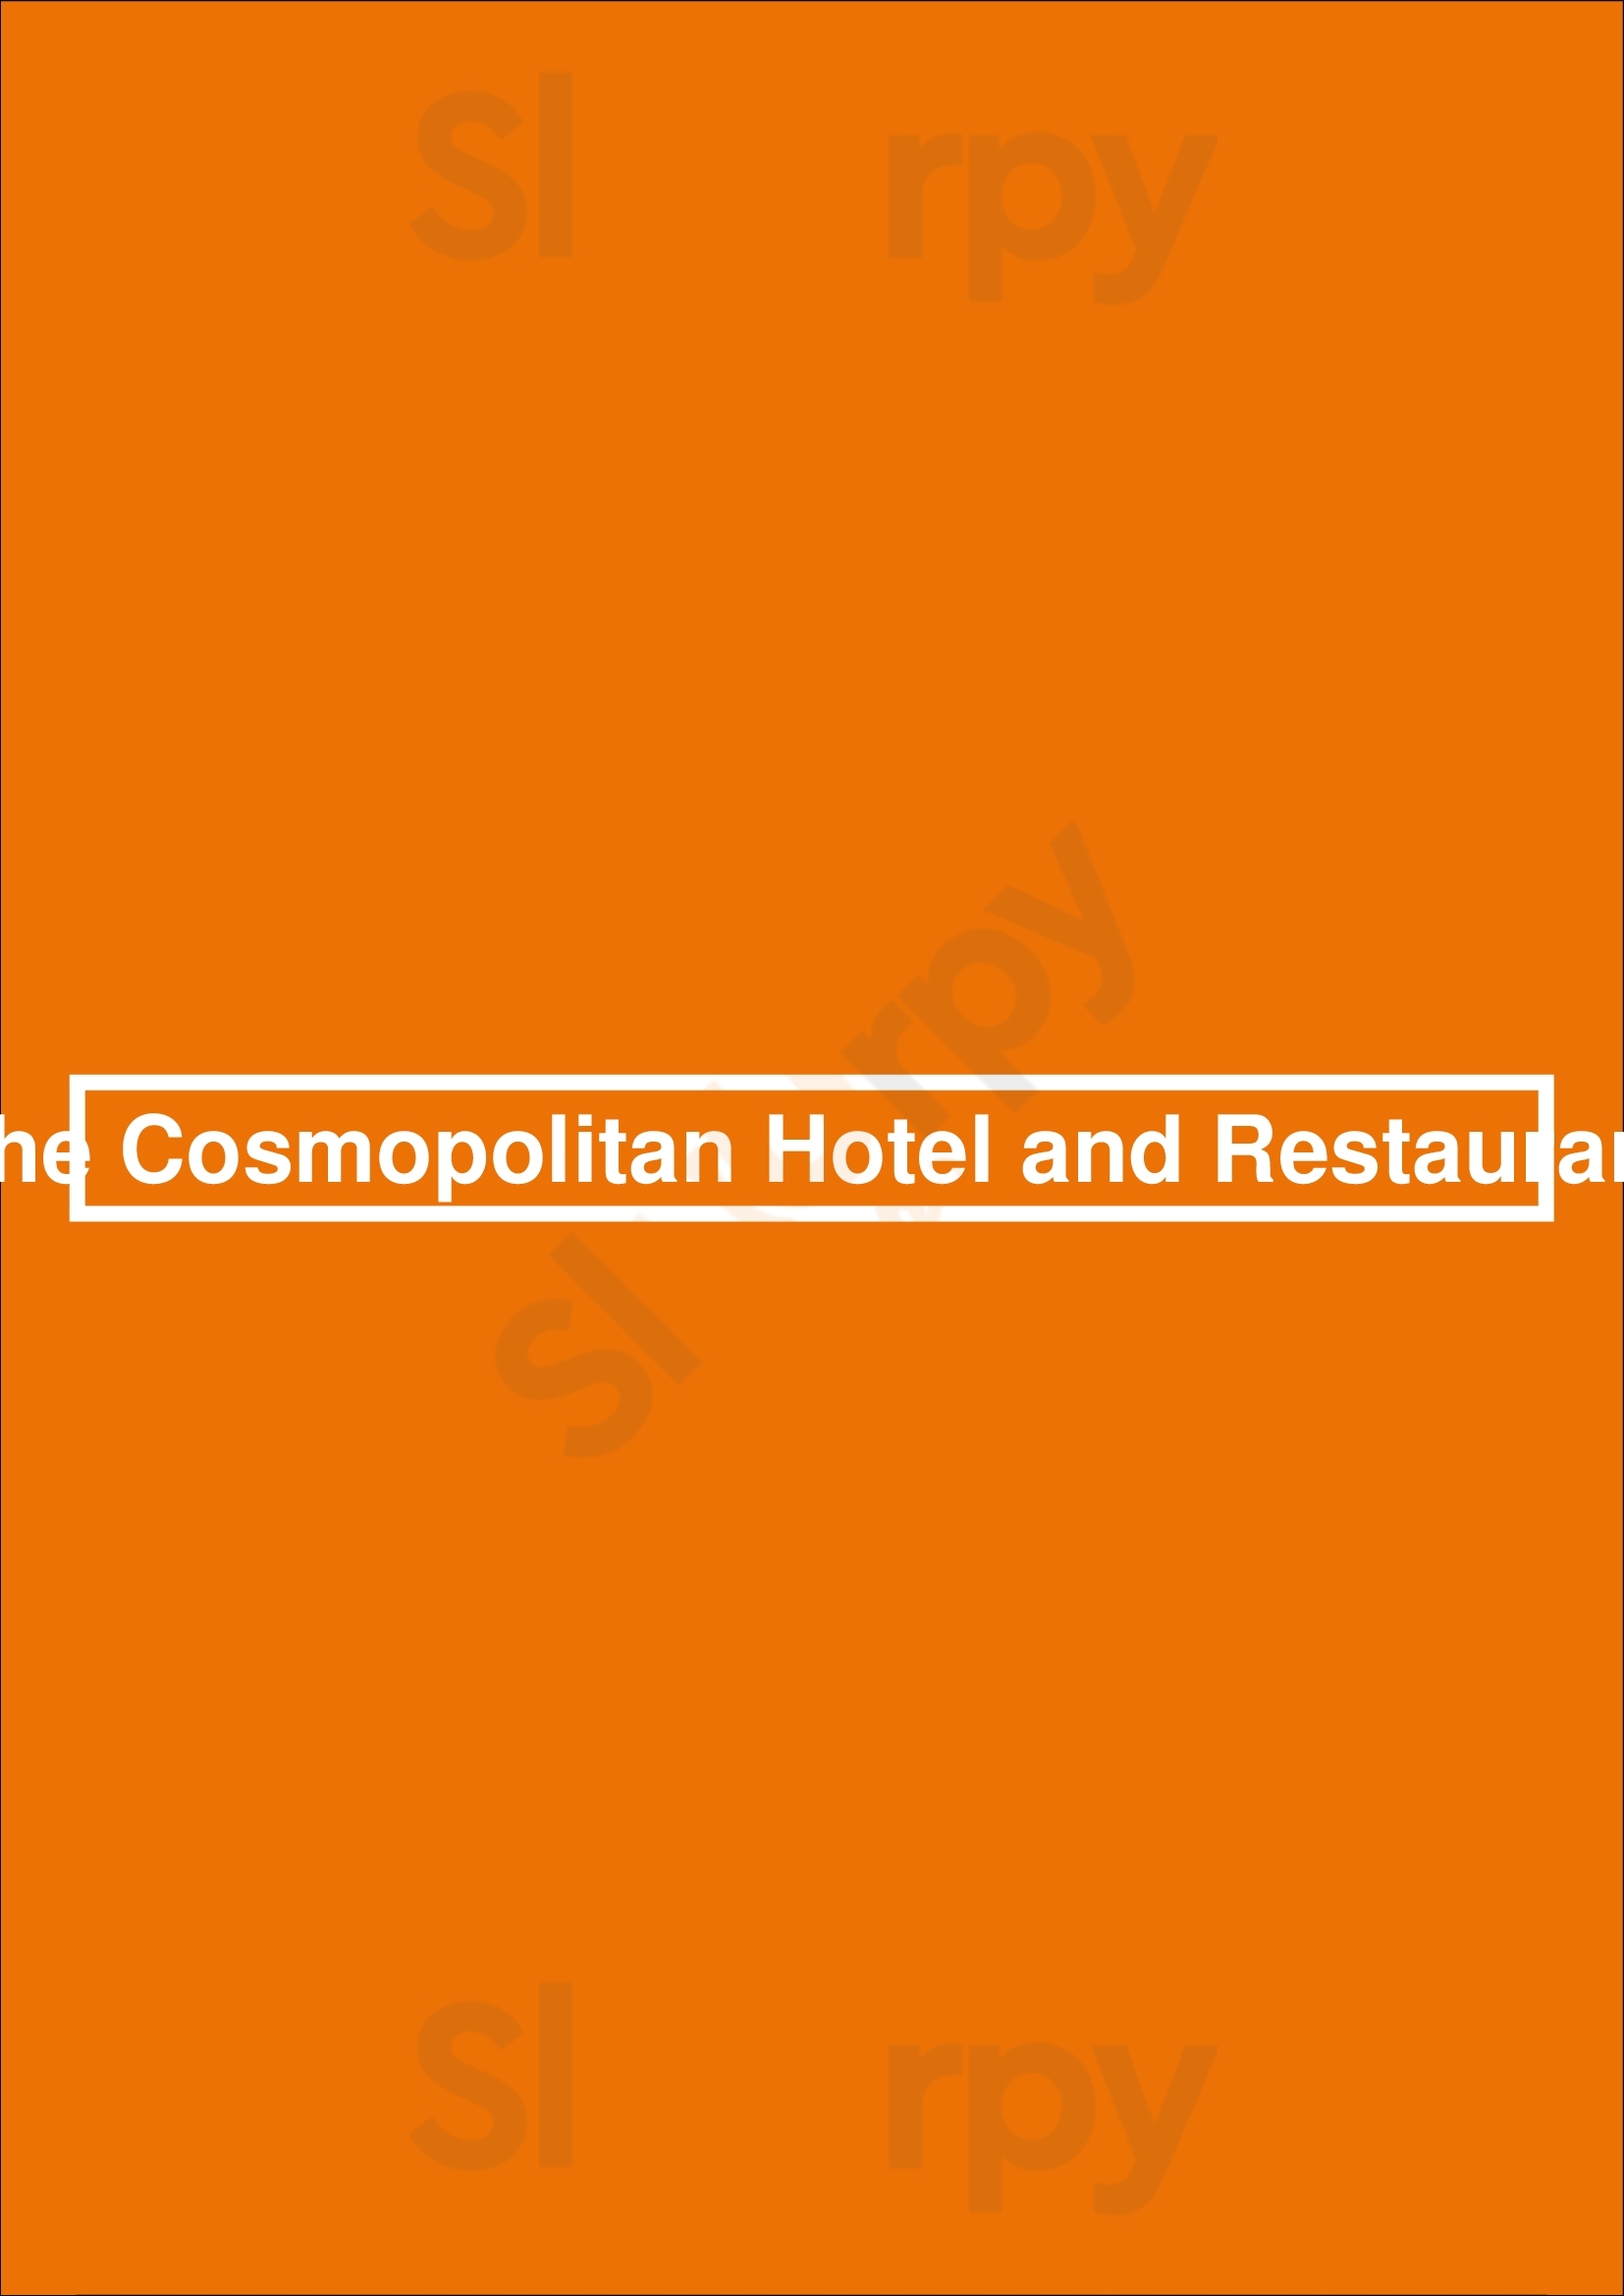 The Cosmopolitan Hotel And Restaurant San Diego Menu - 1